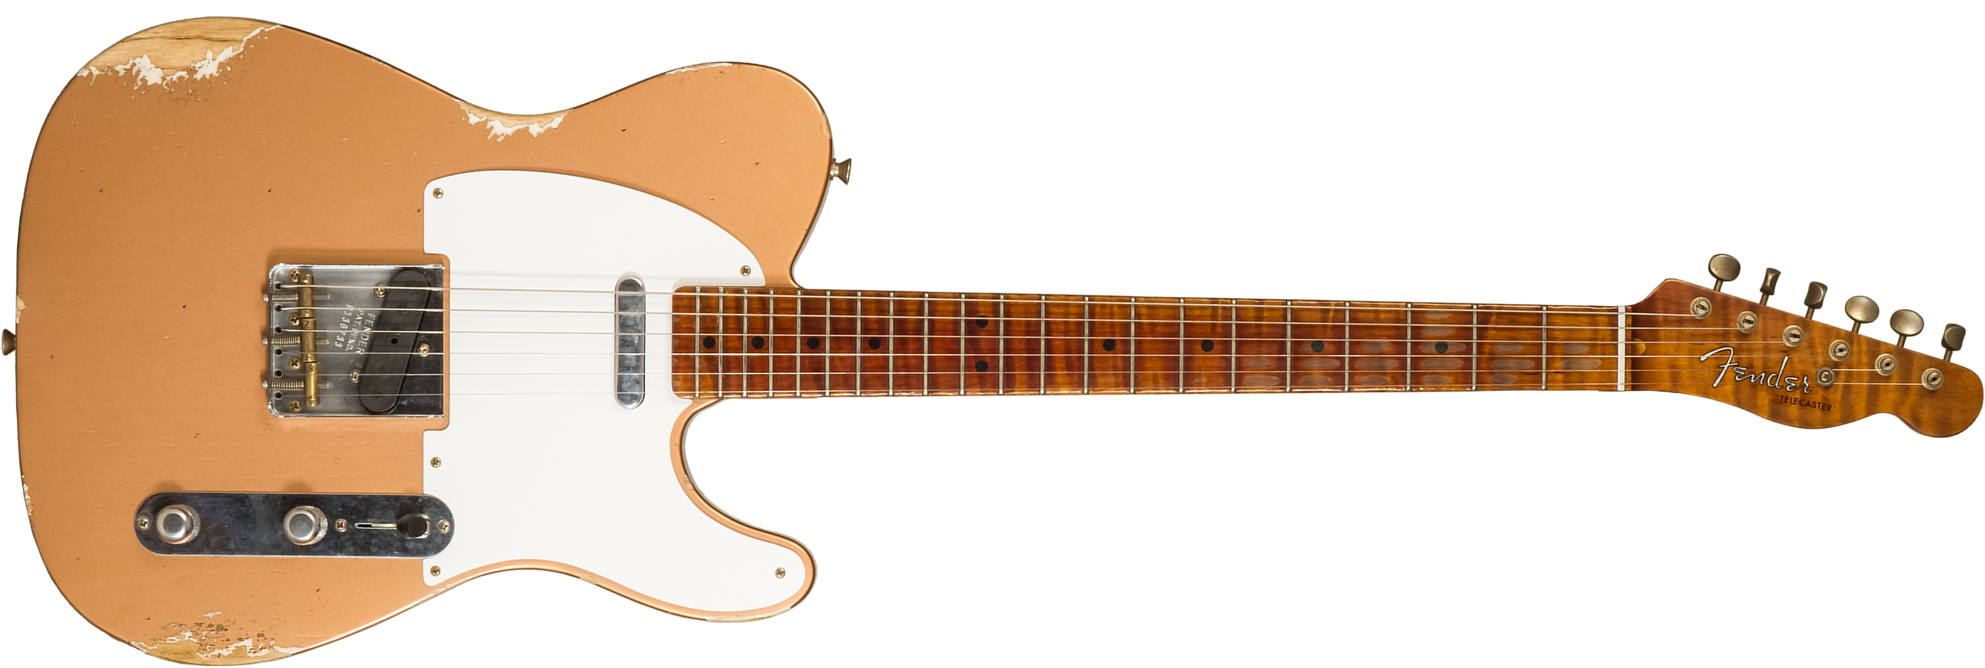 Fender Custom Shop Tele 1952 2s Ht Mn #r136733 - Relic Copper - Televorm elektrische gitaar - Main picture